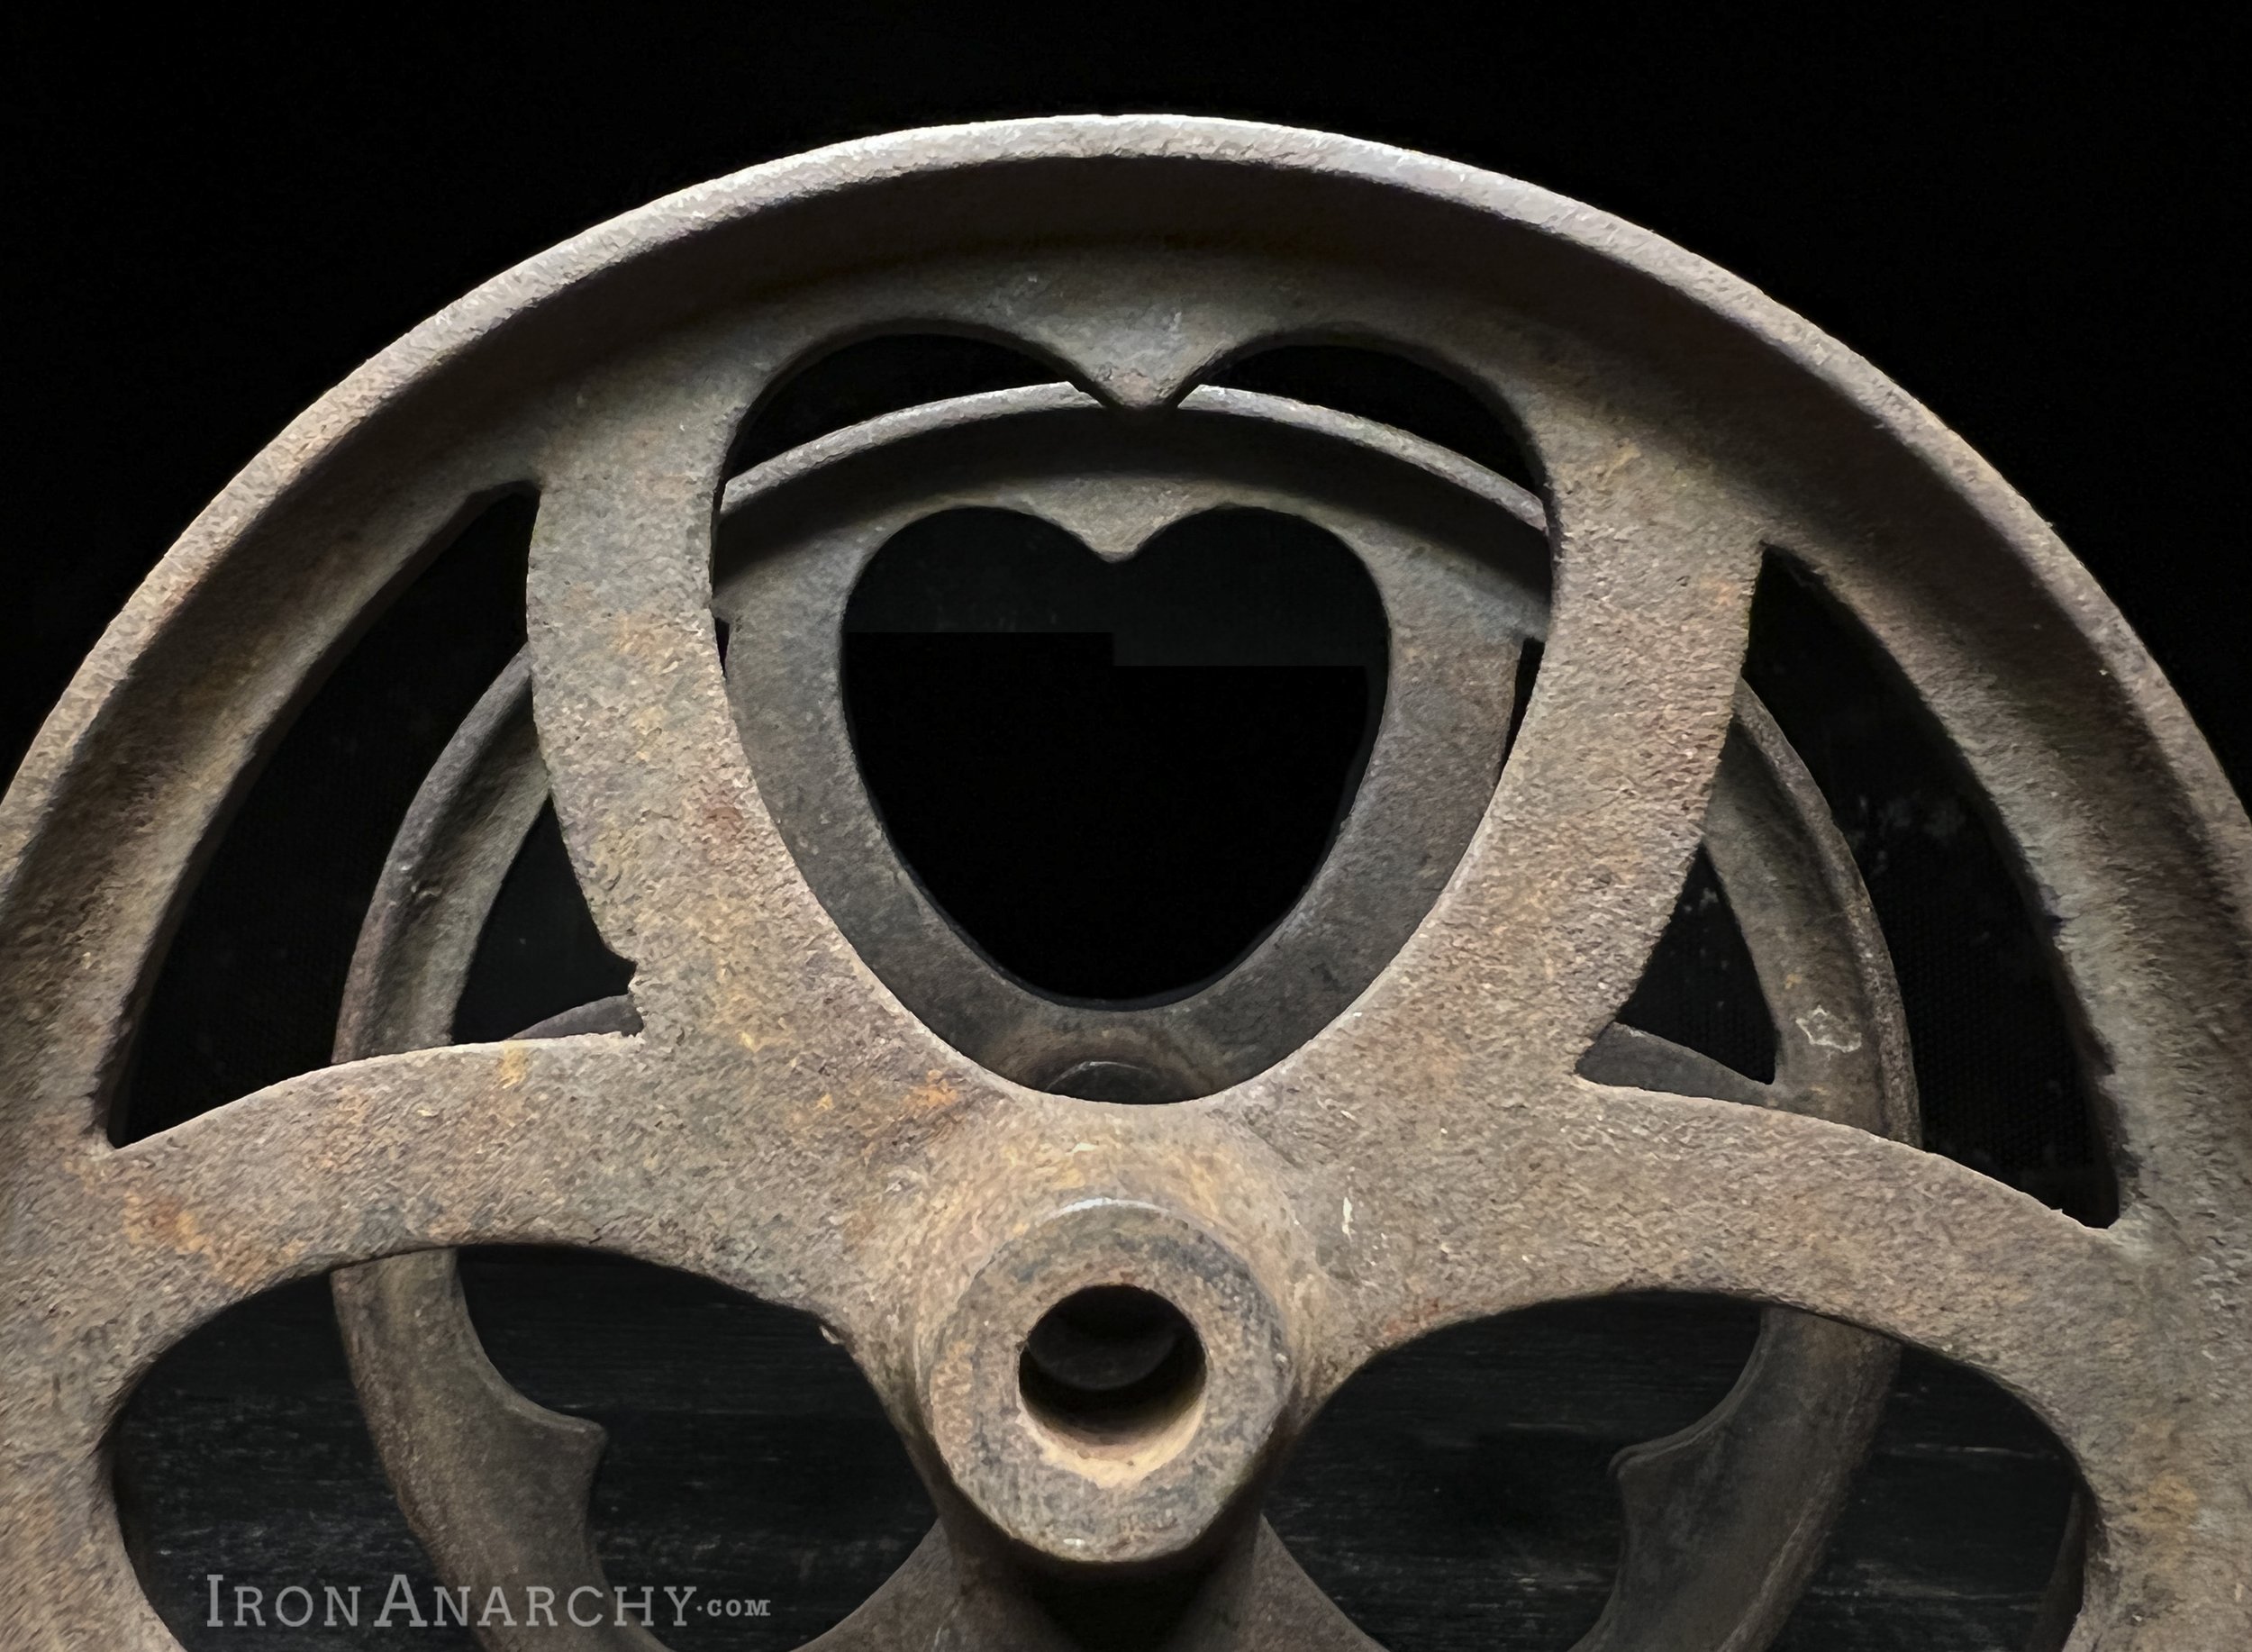 antique industrial cart wheels, vintage factory cart wheels,